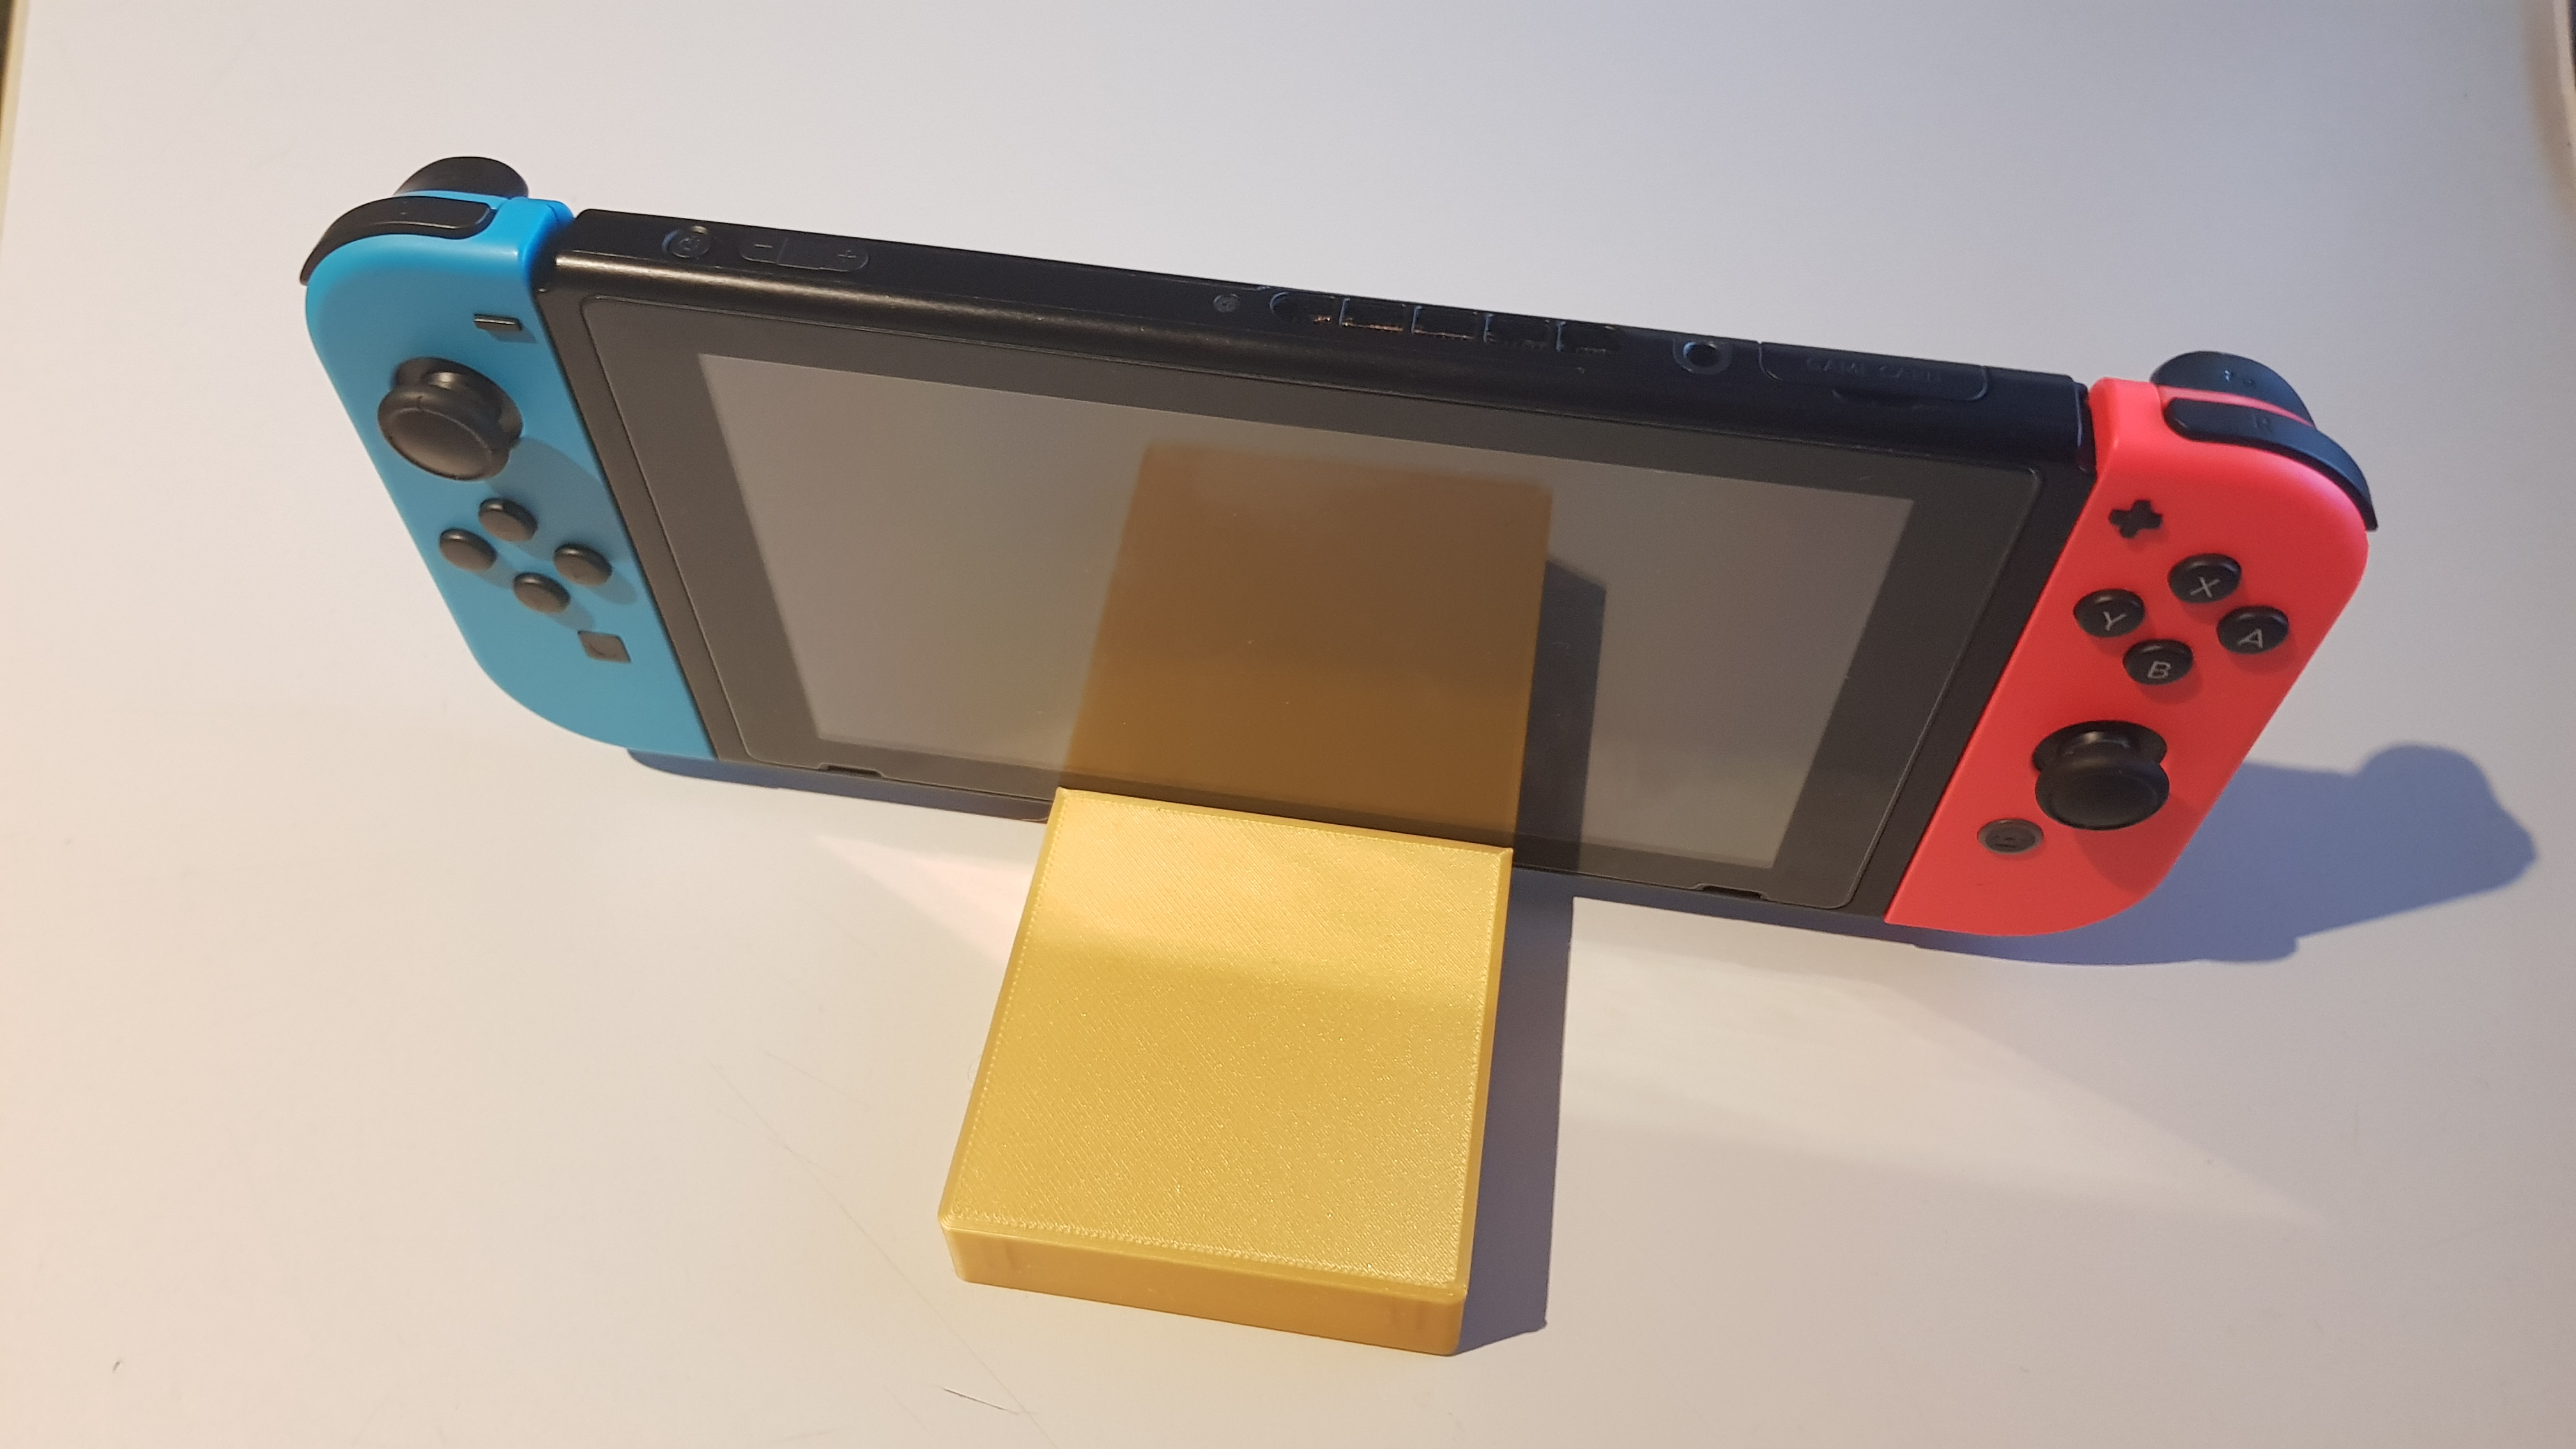 Compact Nintendo Switch Dock